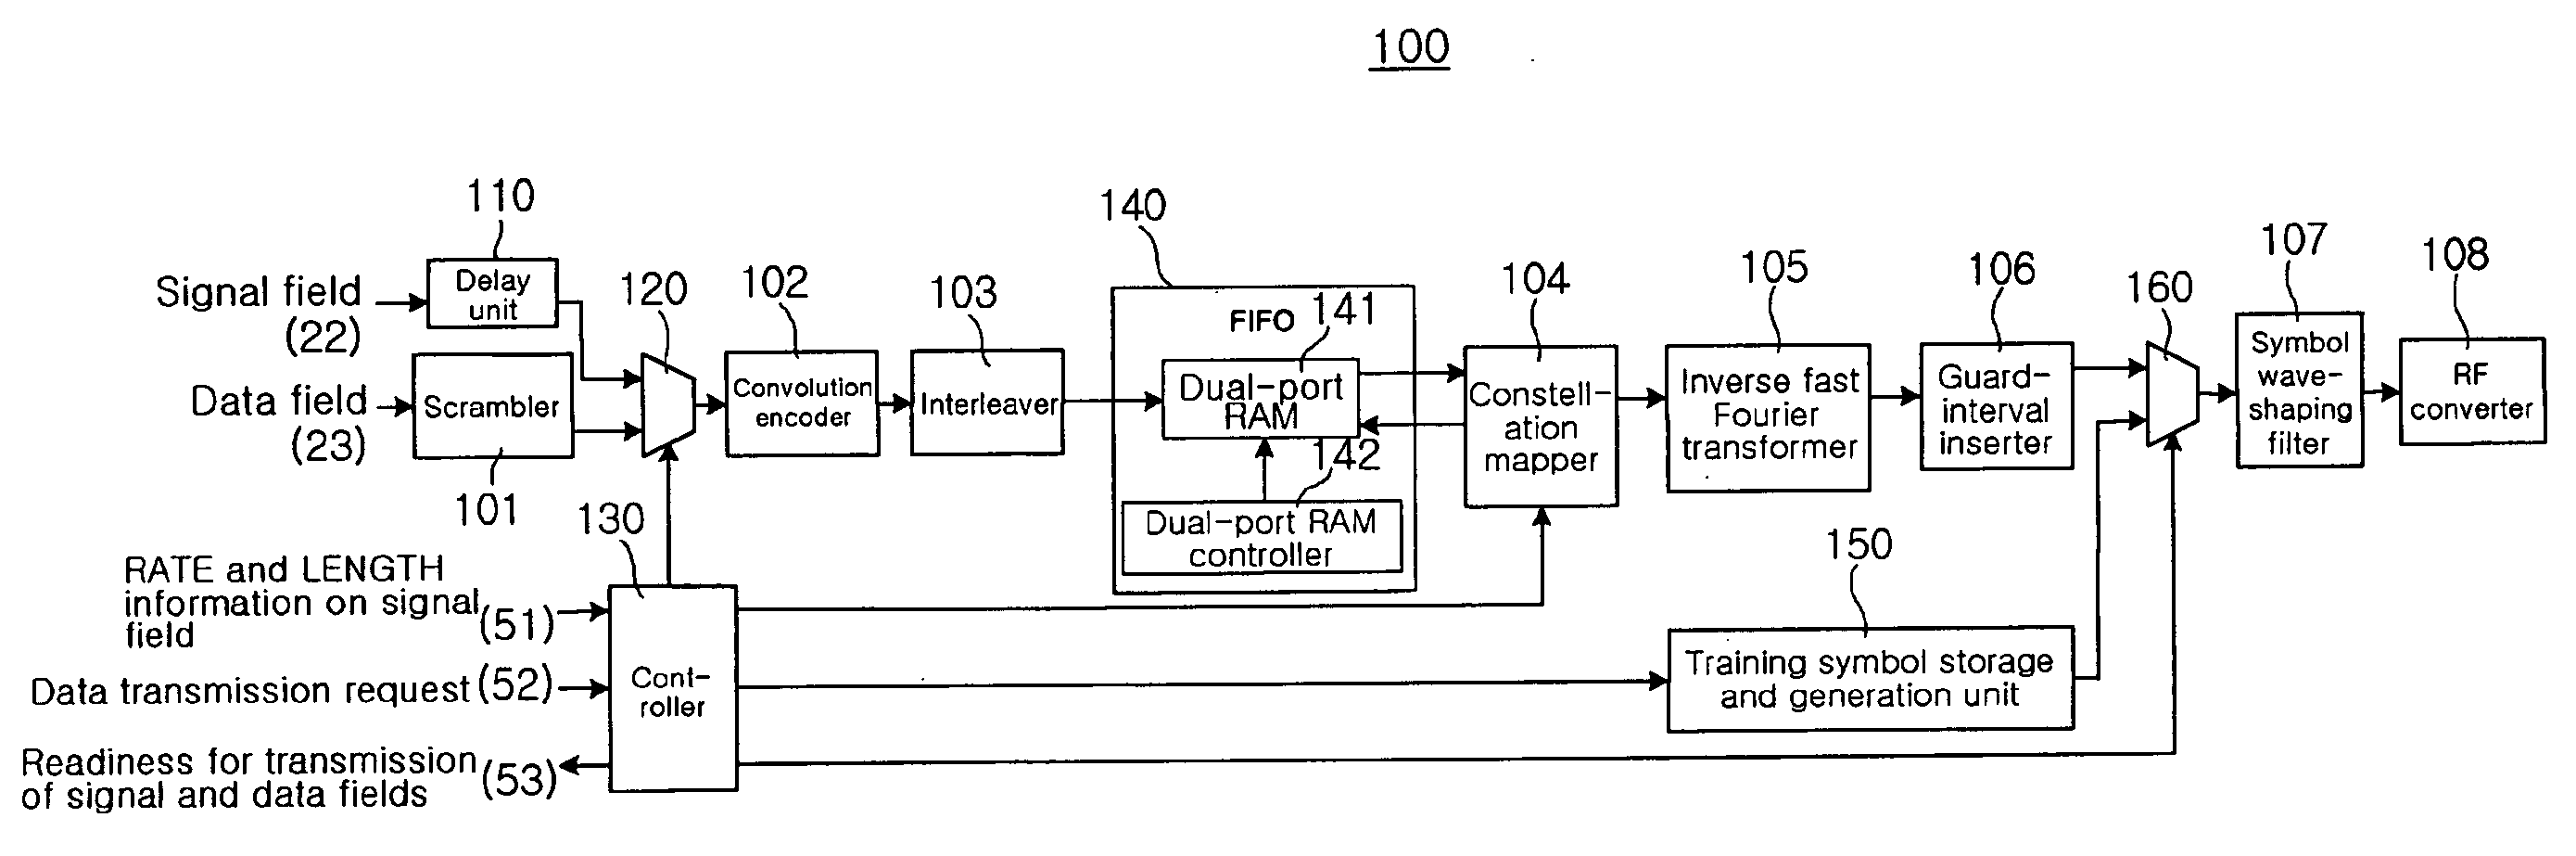 OFDM transmission apparatus and method having minimal transmission delay